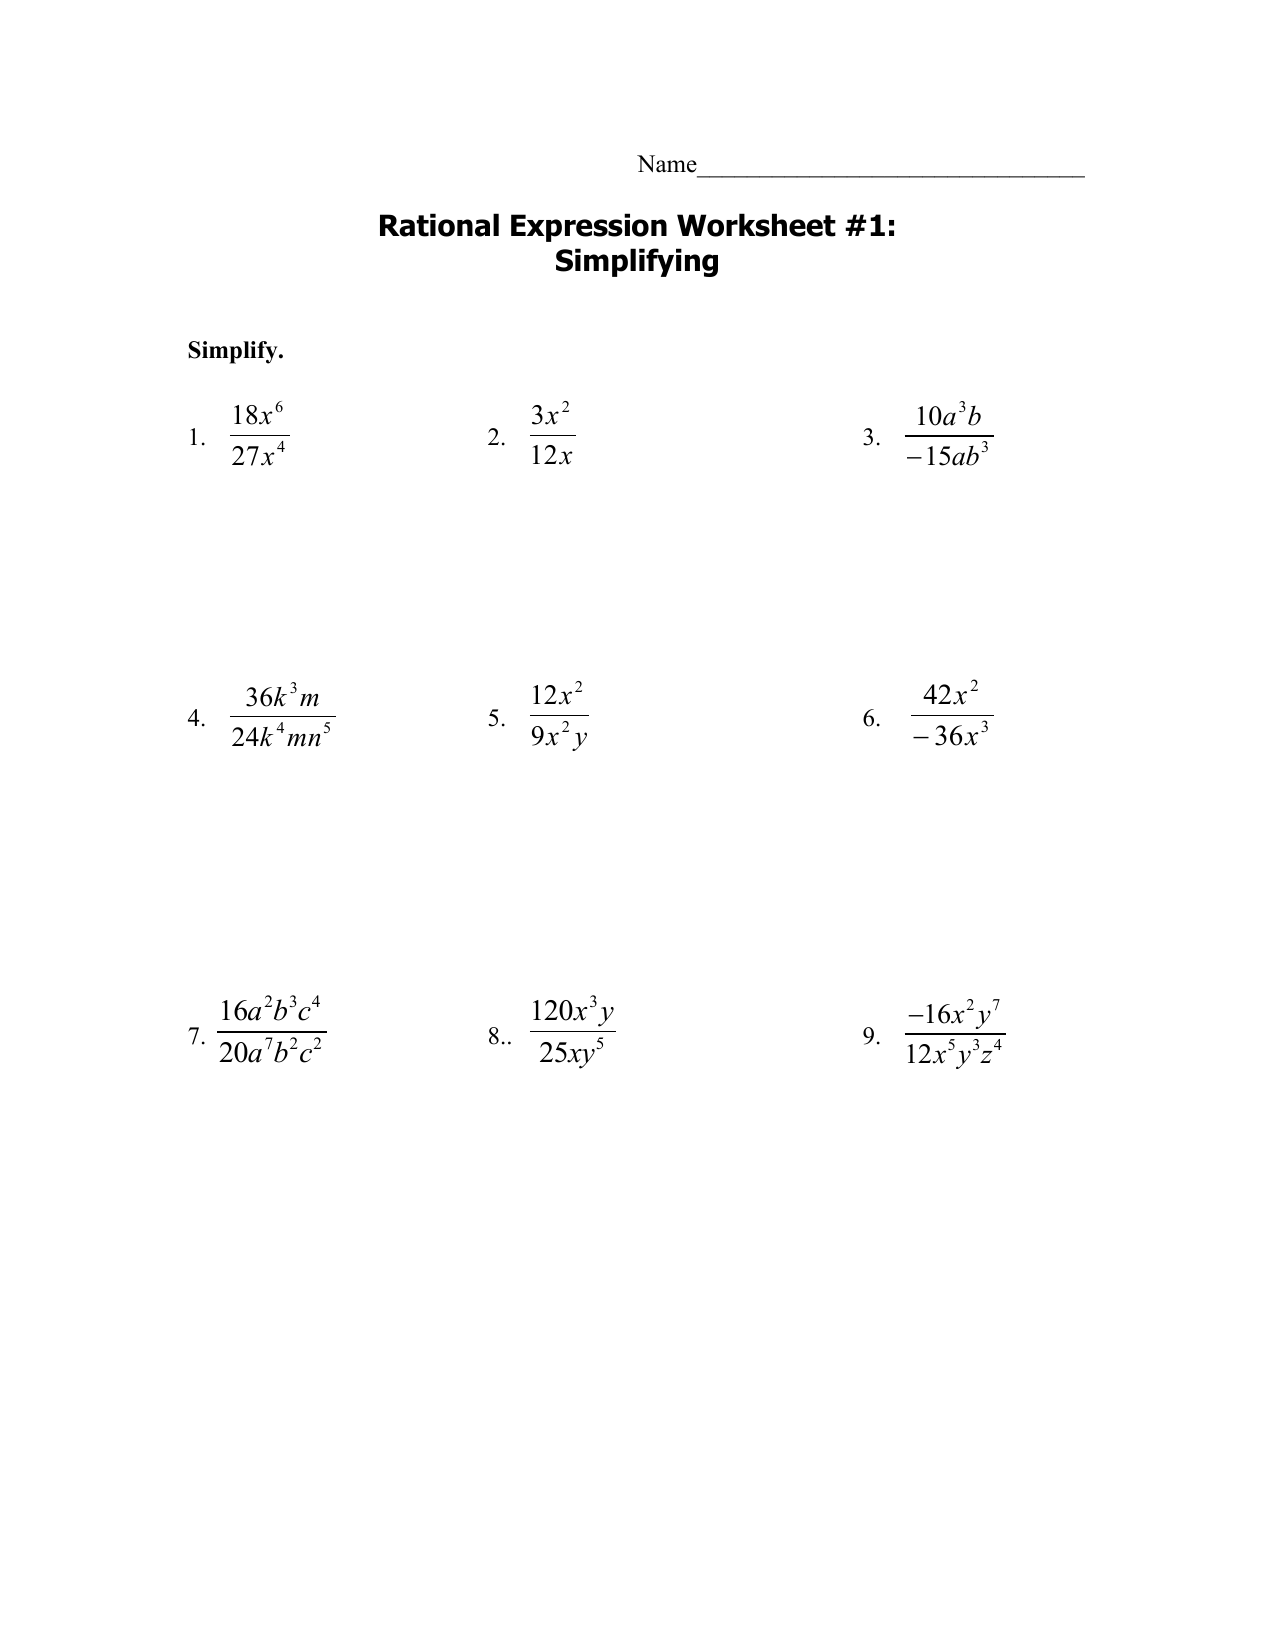 M24 rationalworksheets24-245 24 Inside Simplifying Rational Expressions Worksheet